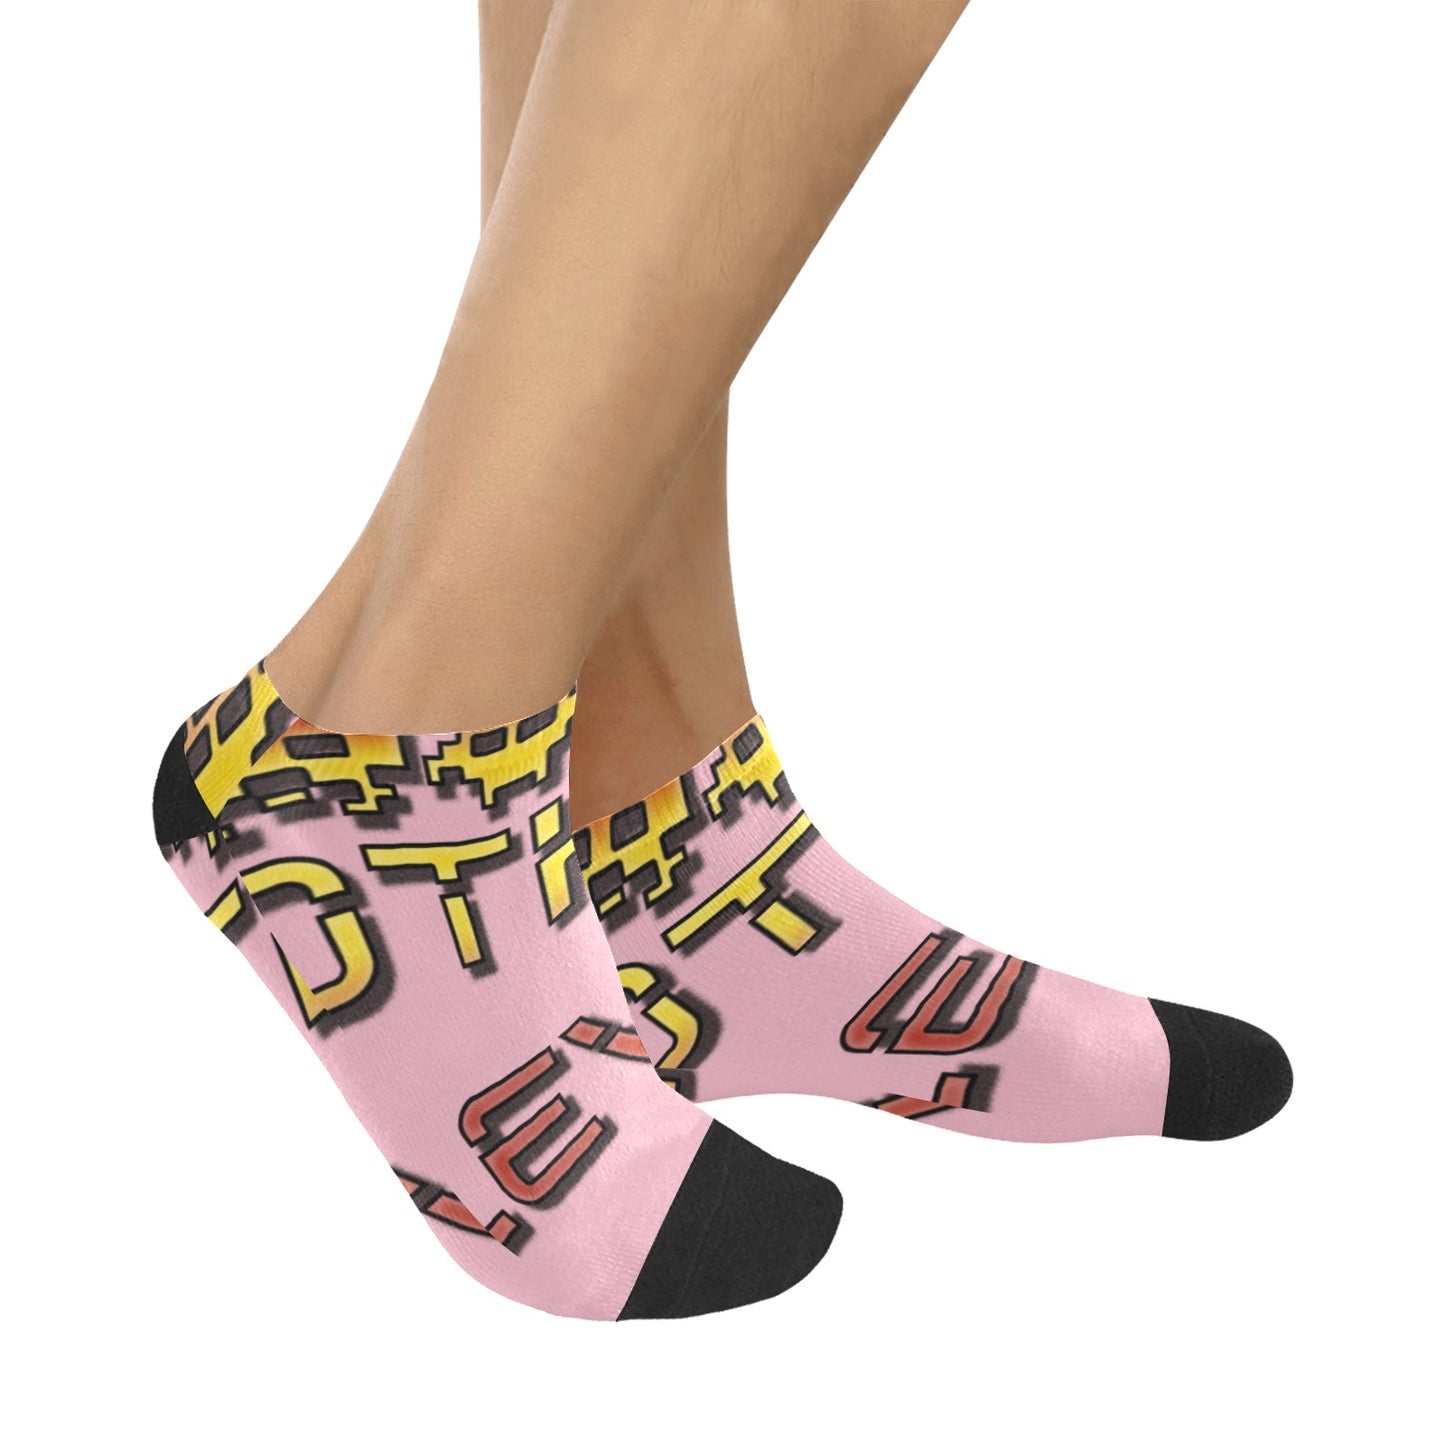 fz men's levels ankle socks one size / fz levels socks - pink men's ankle socks